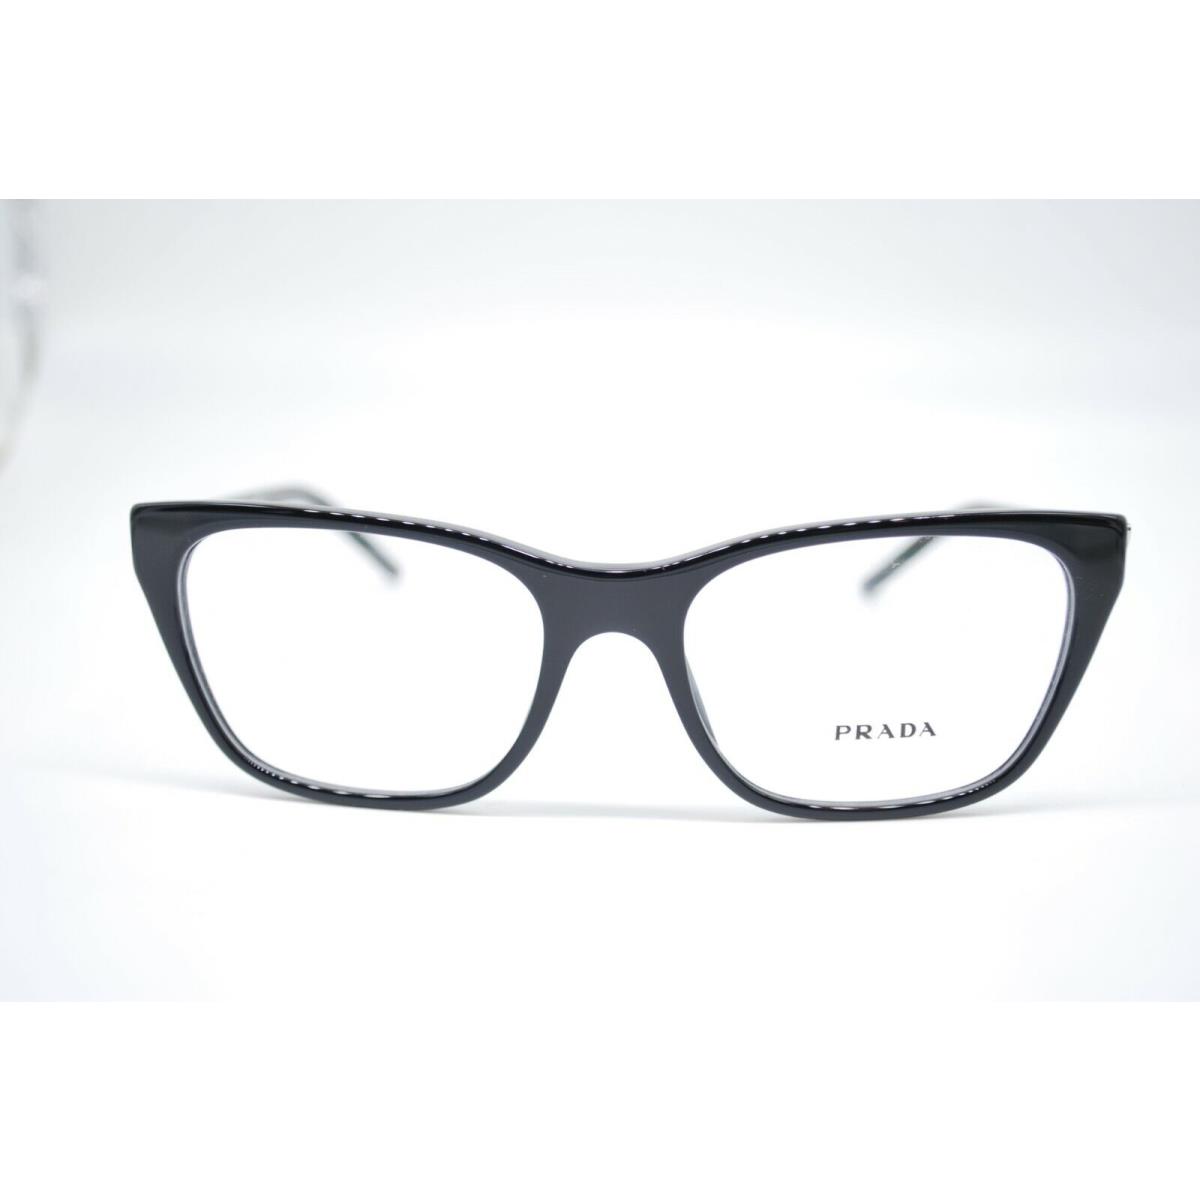 Prada eyeglasses VPR - Red Frame 1